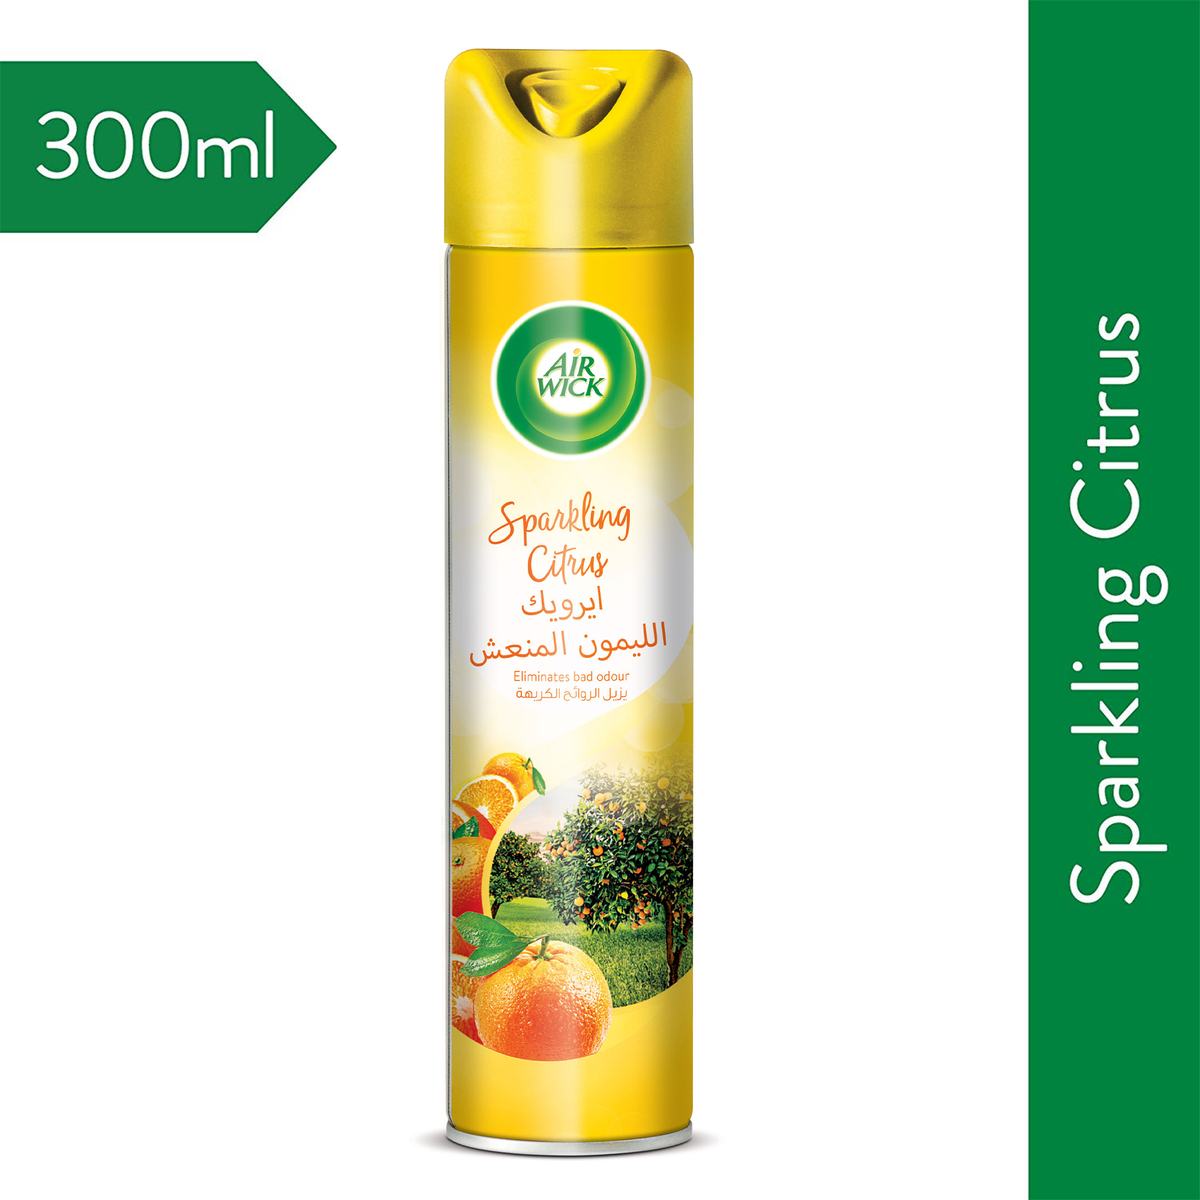 Airwick Sparkling Citrus Aerosol Easy to Use Air Freshener 300 ml